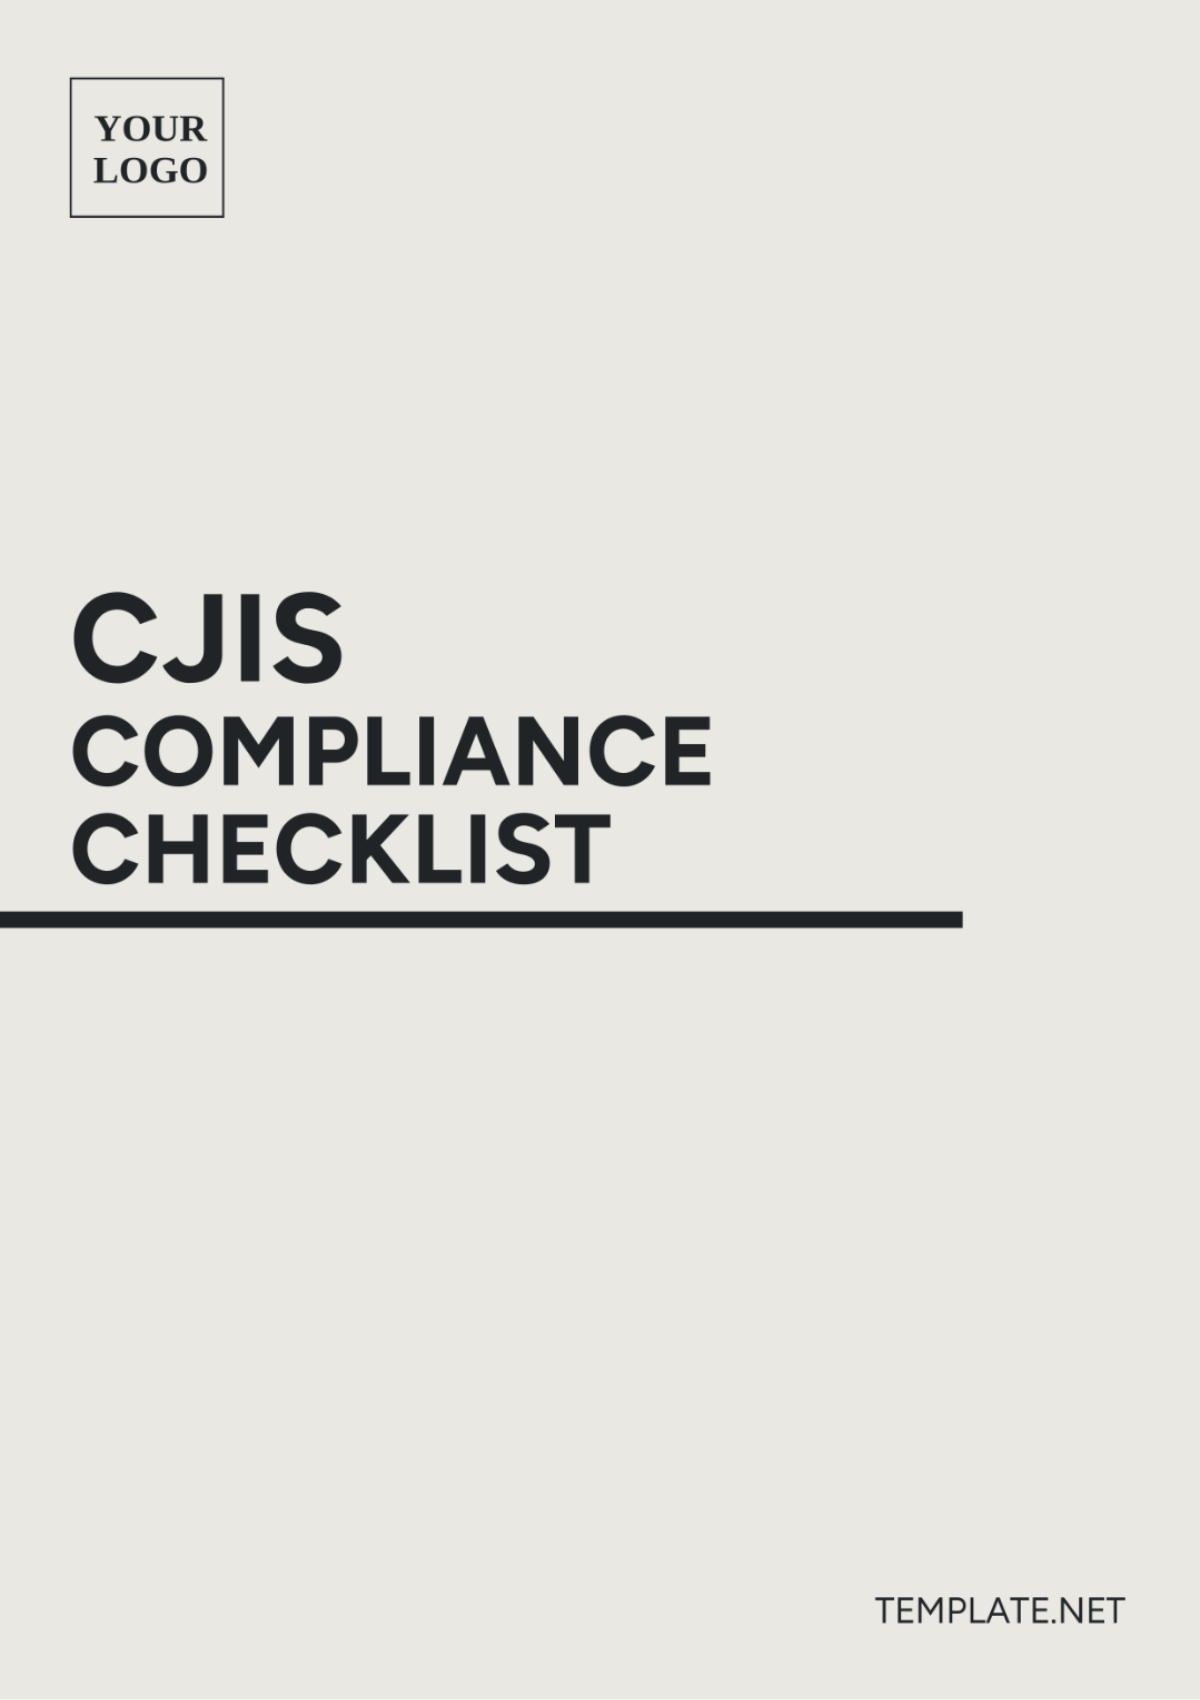 CJIS Compliance Checklist Template